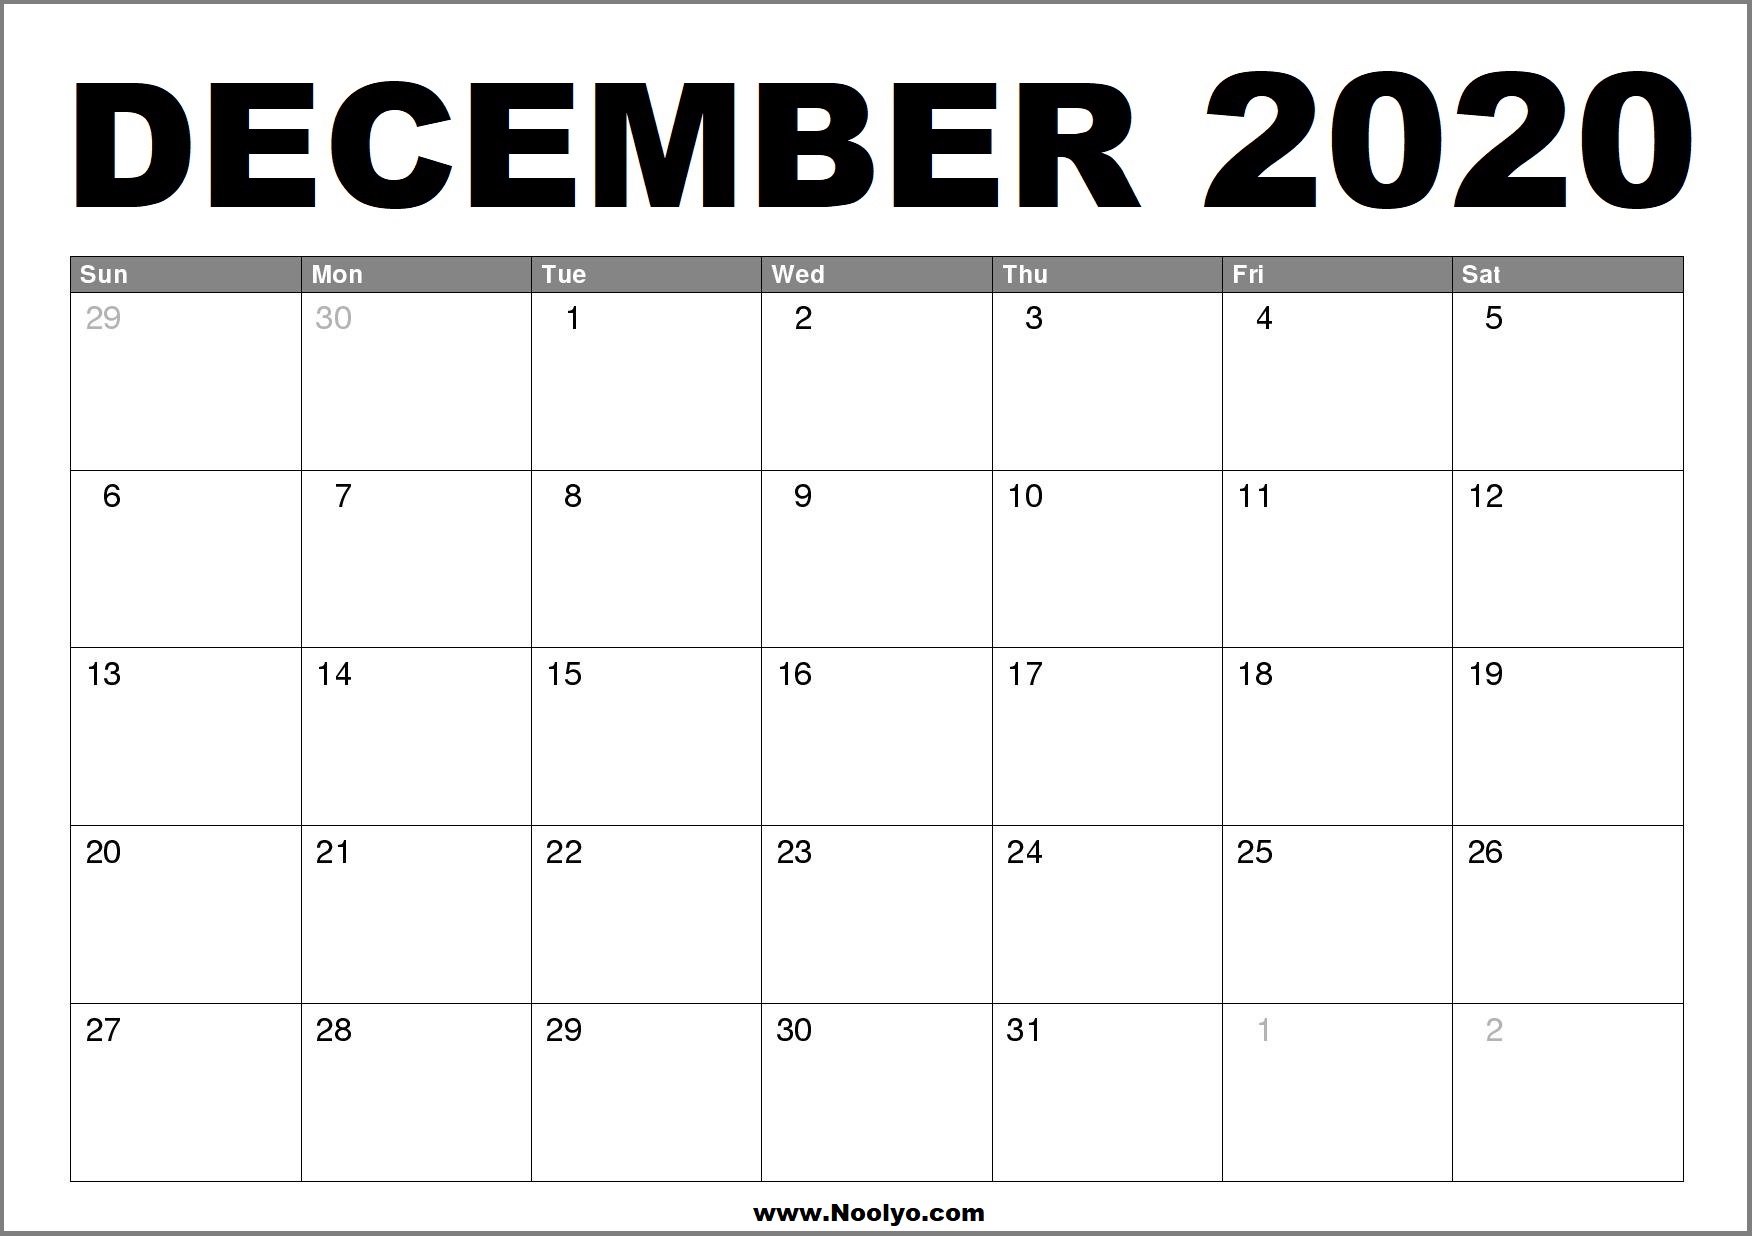 December 2020 Calendar Printable – Free Download